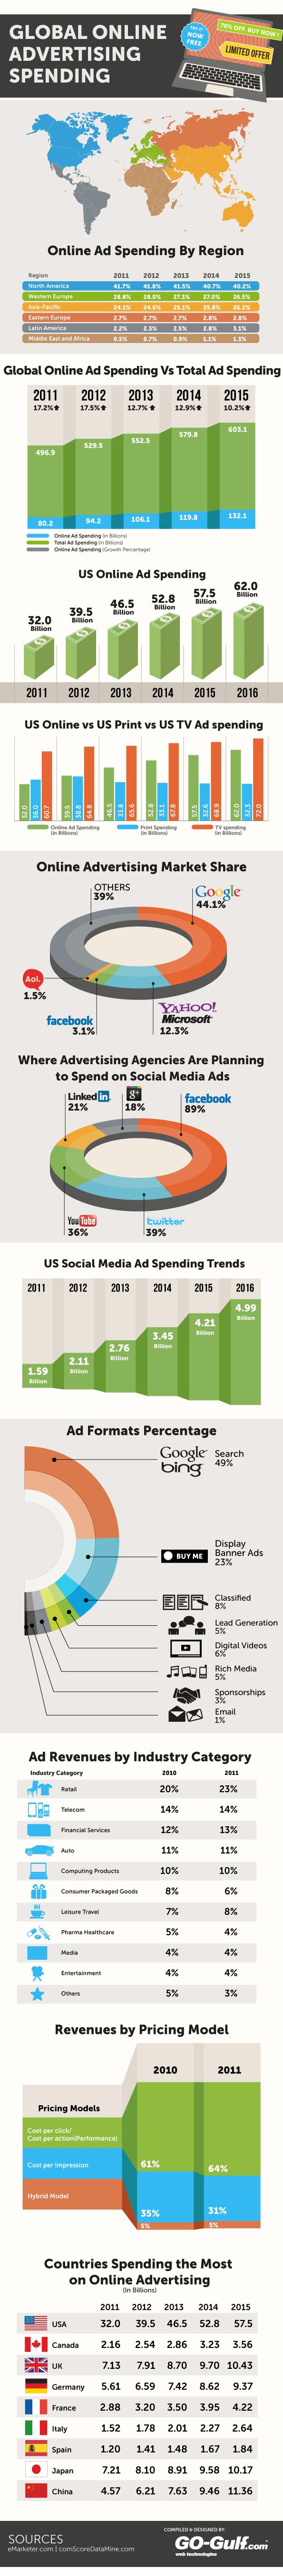 Global Online Advertising Spending Statistics